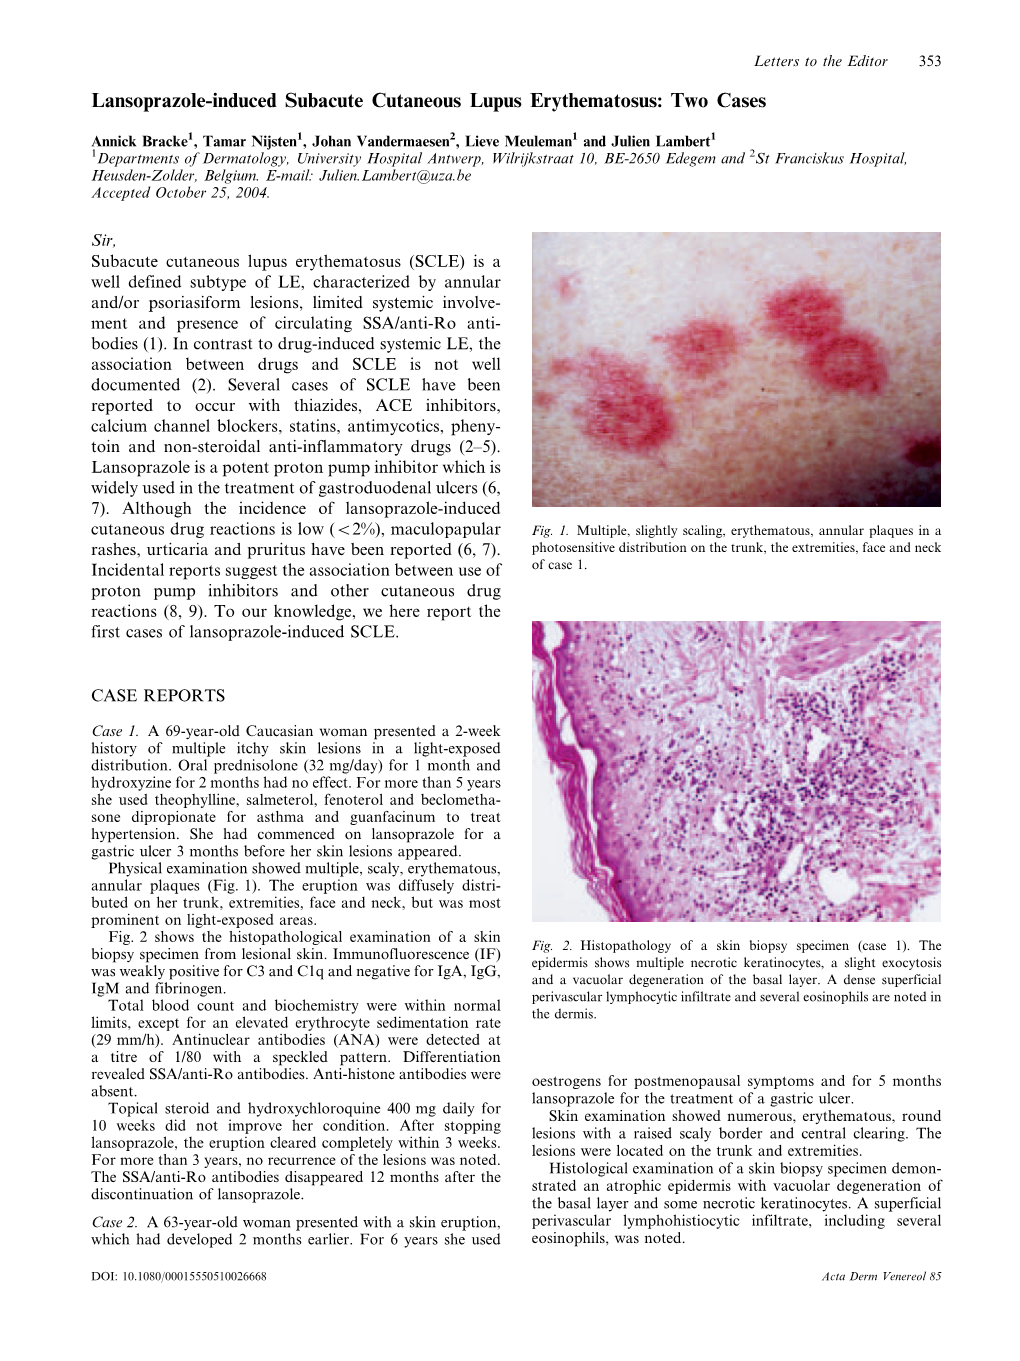 Lansoprazole-Induced Subacute Cutaneous Lupus Erythematosus: Two Cases